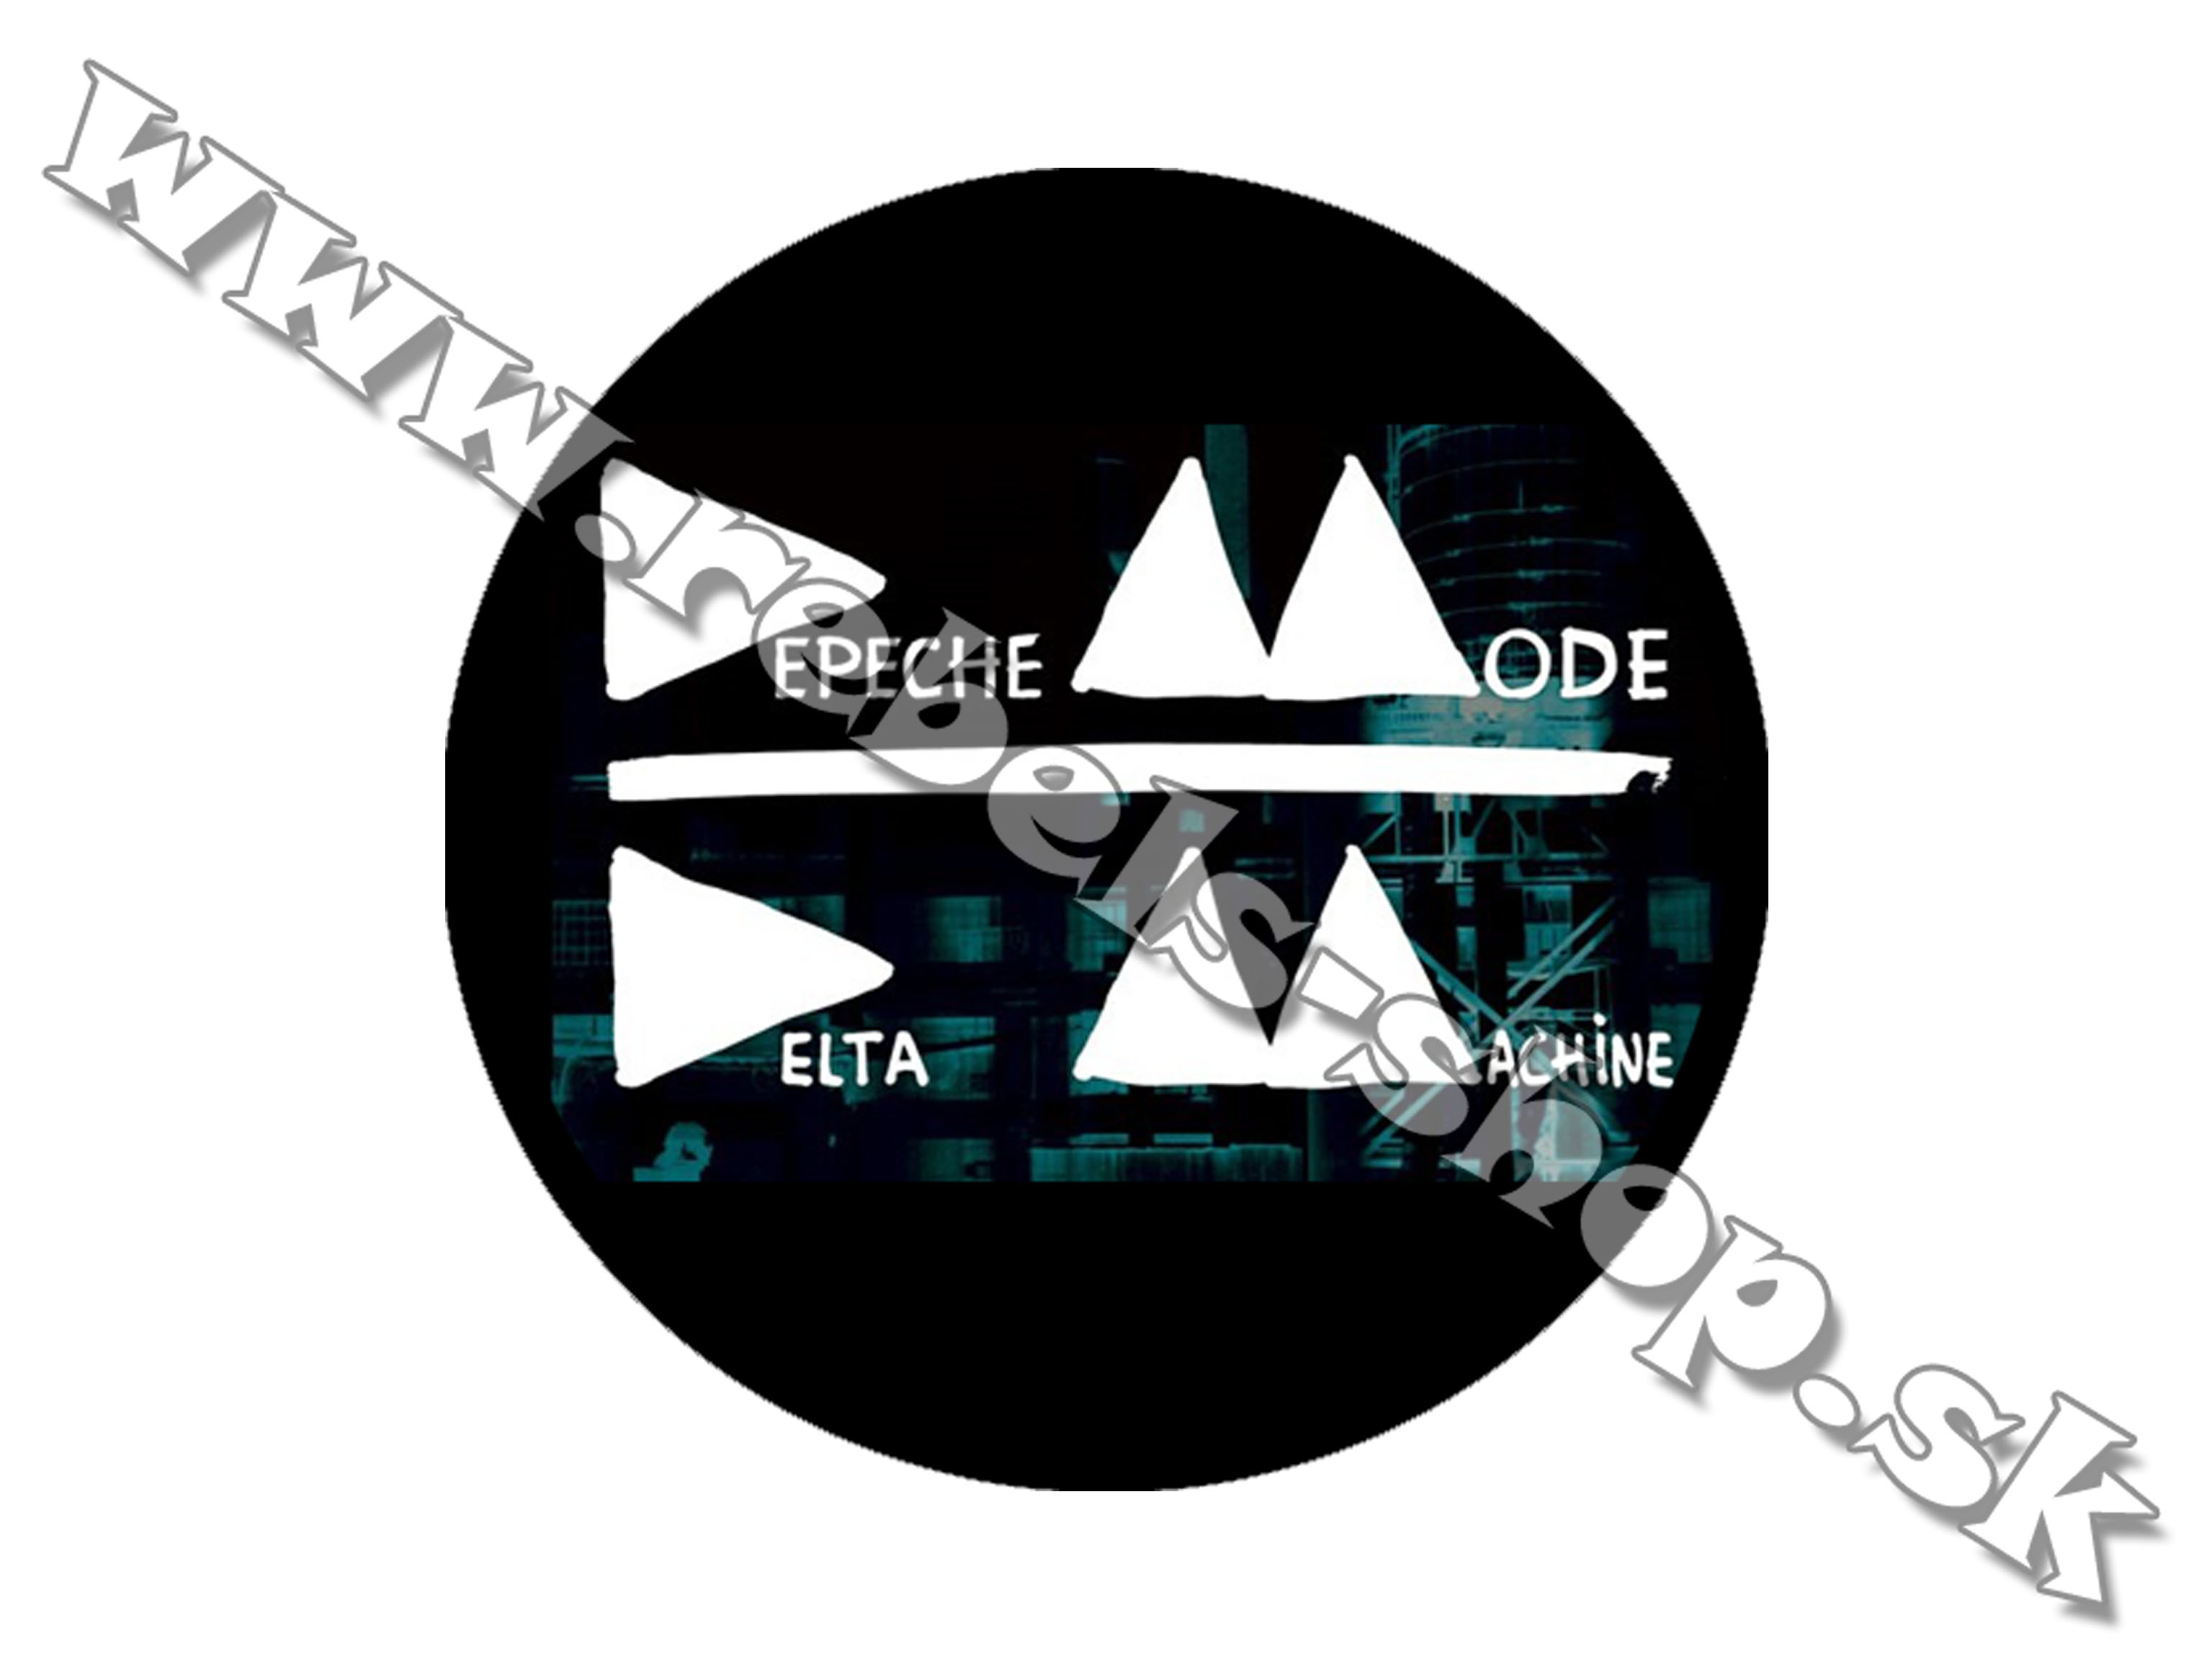 Odznak "Depeche Mode"